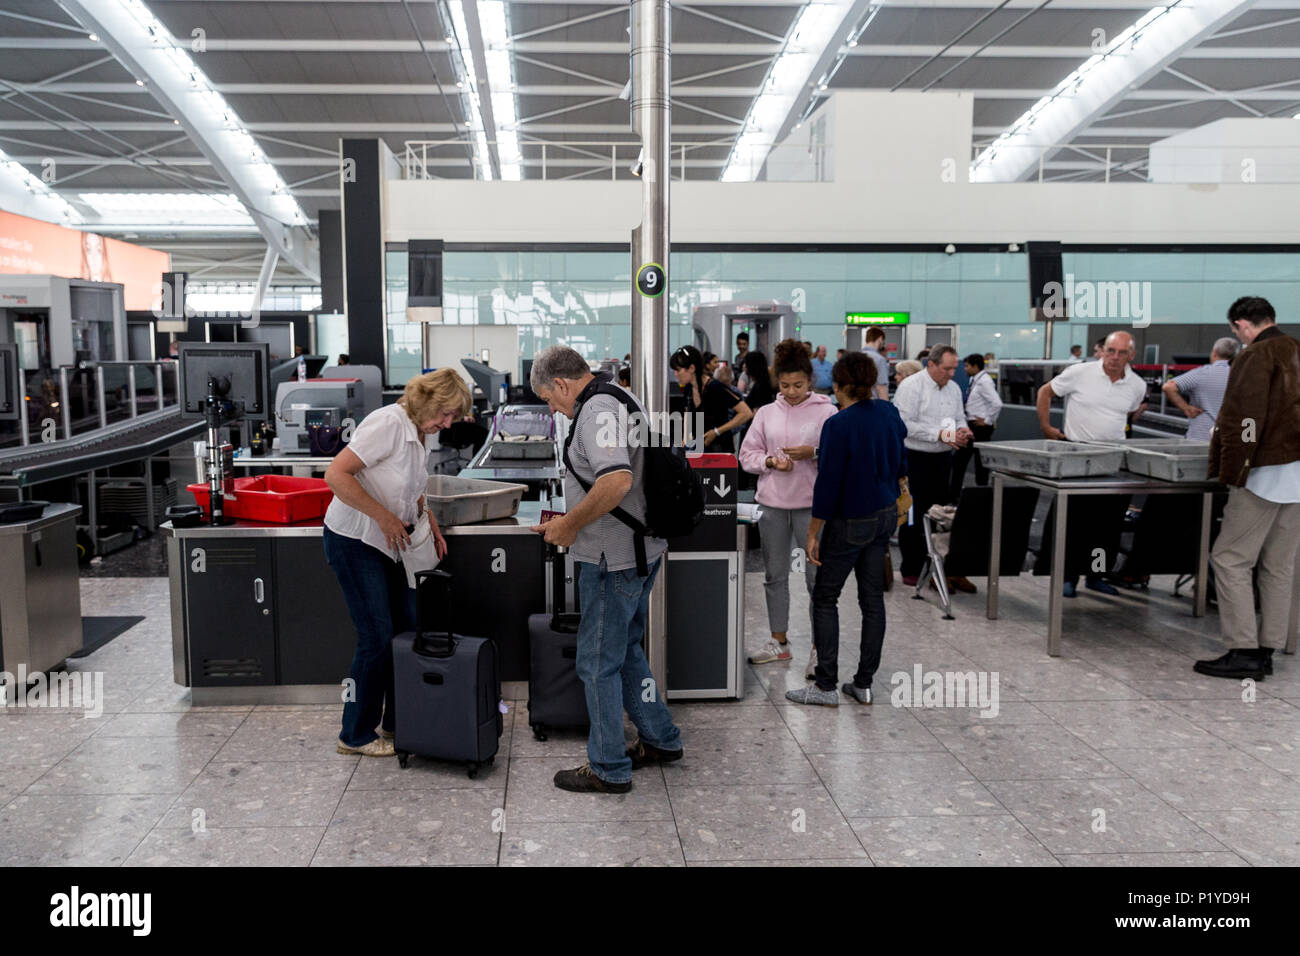 LONDON - MAY 27, 2018: People at security check at London Heathrow airport terminal Stock Photo